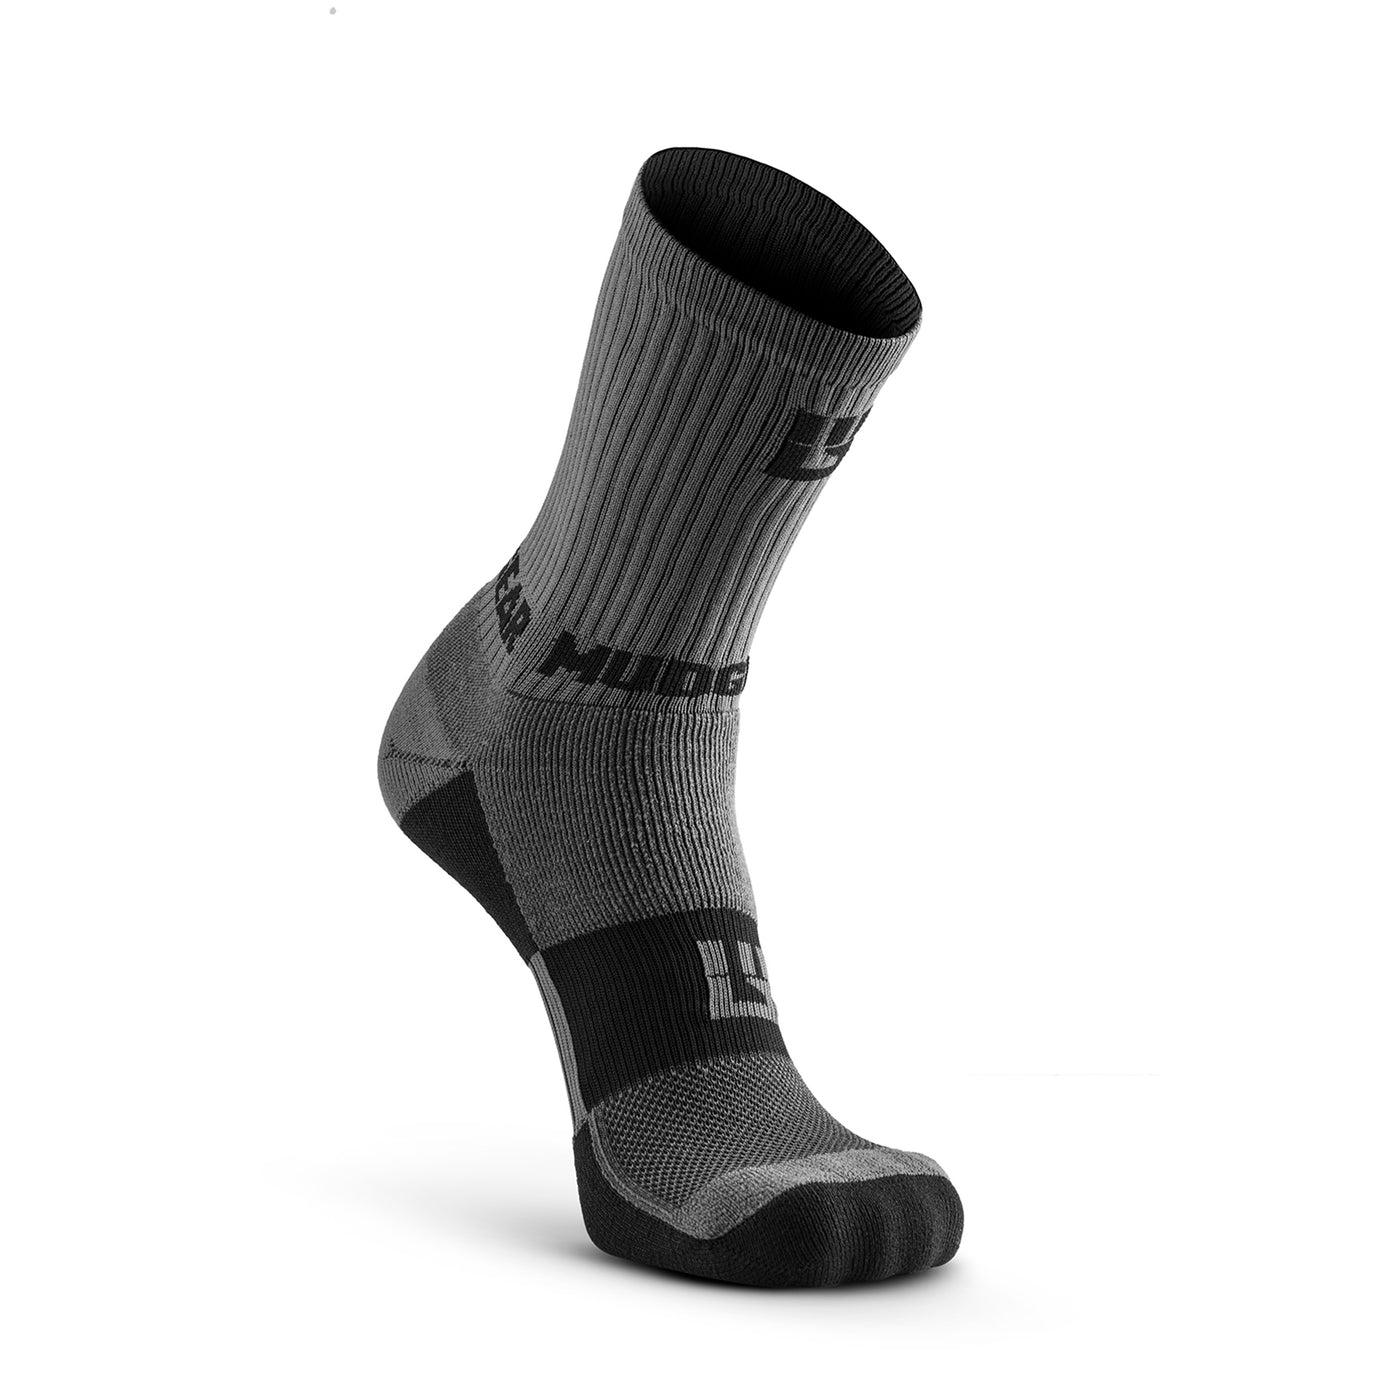 Performance Hiking/Trekking Sock - Gray/Black (2 Pair Pack)